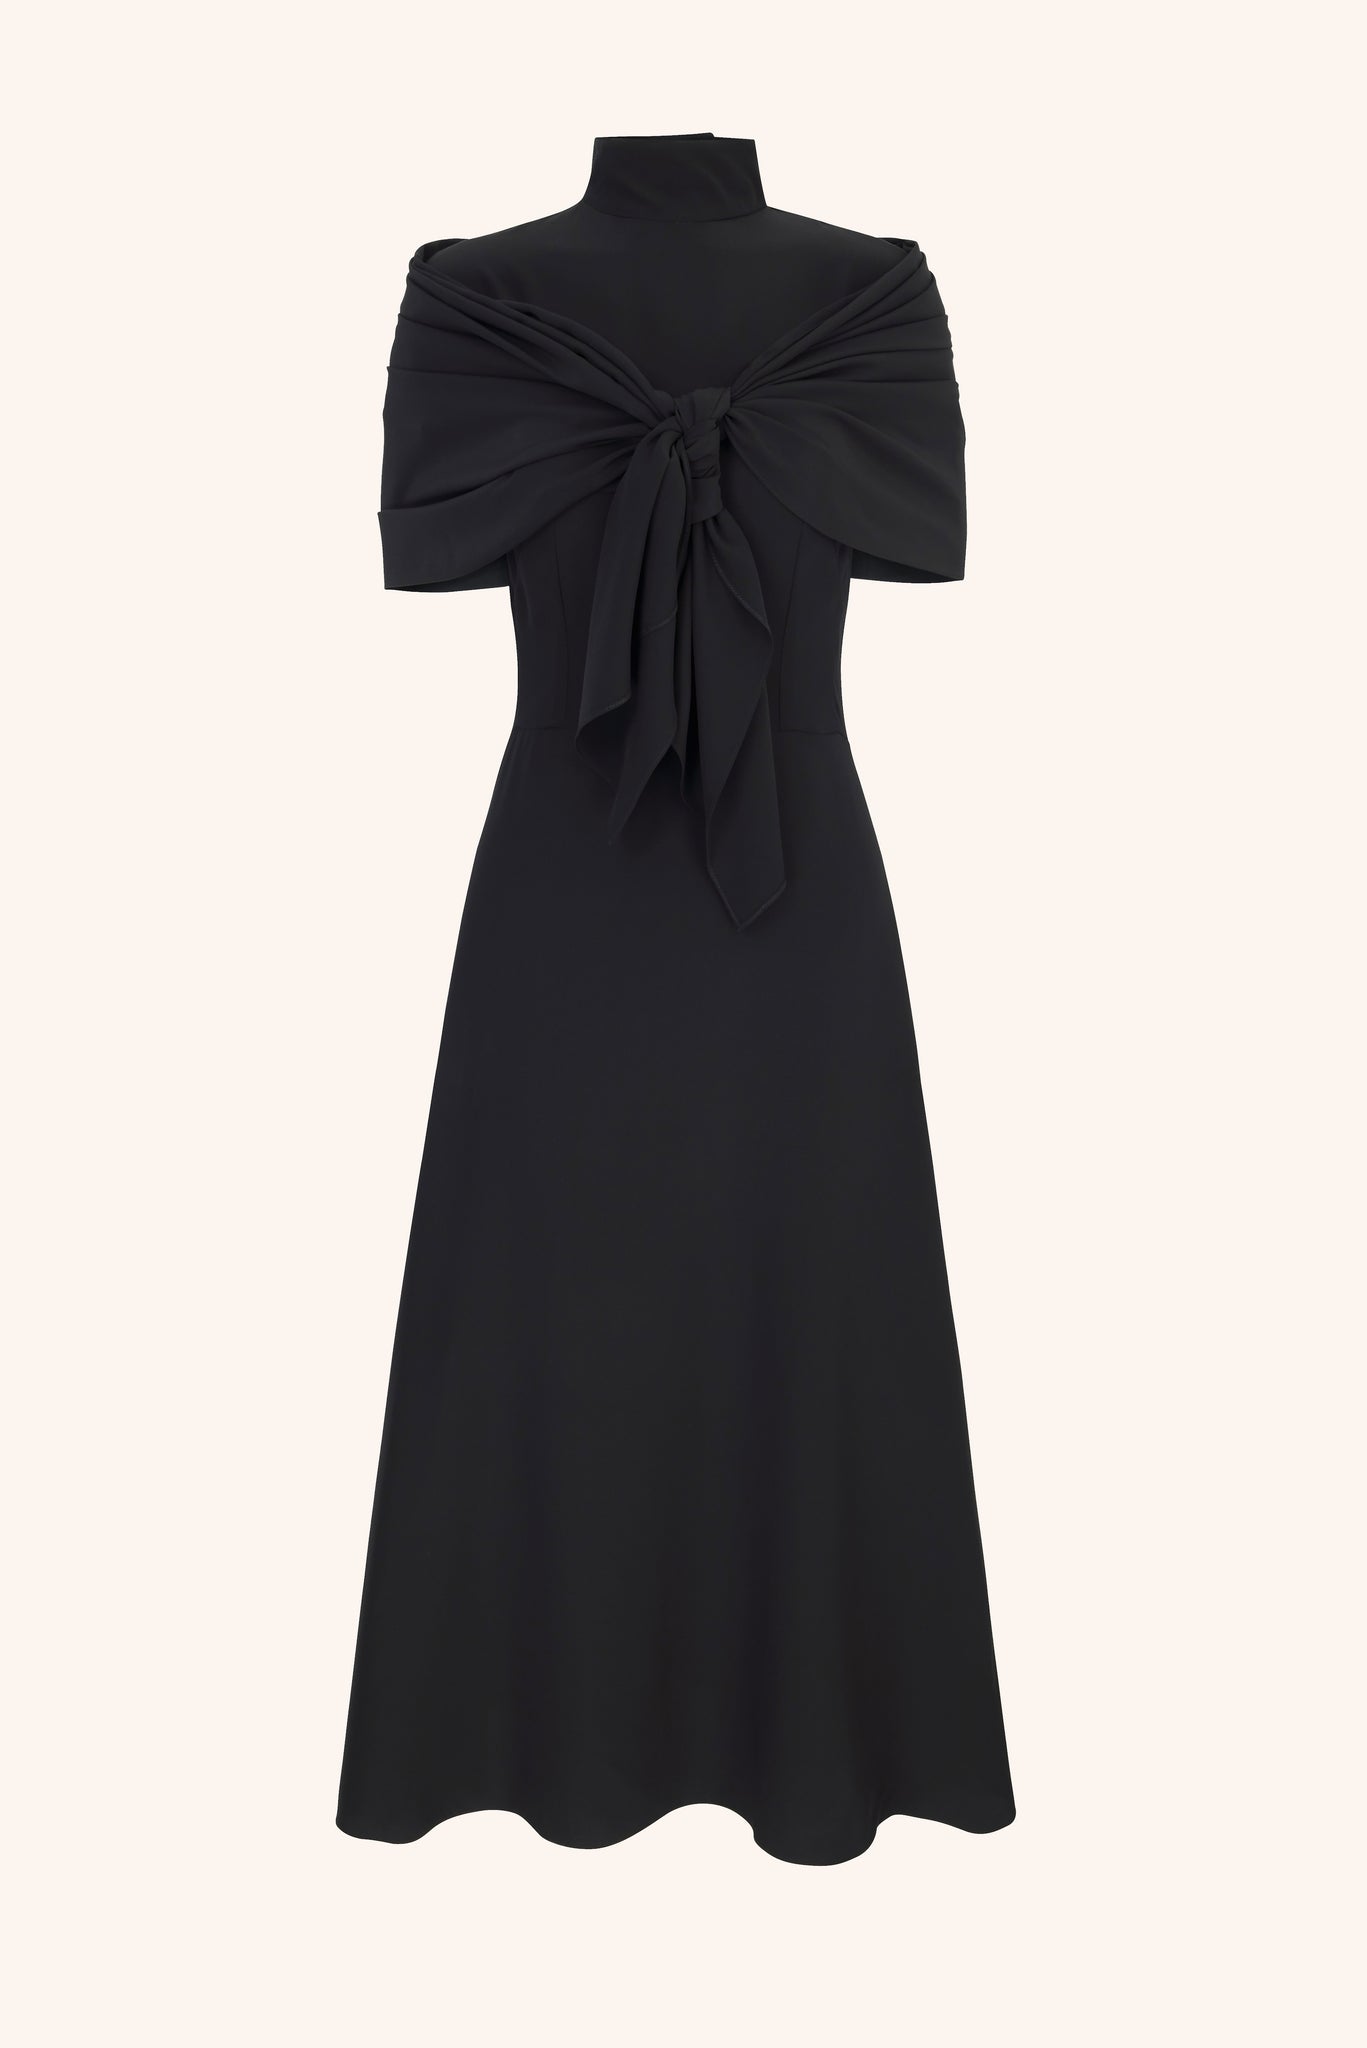 Angelique Dress in Black Silk | Emilia Wickstead